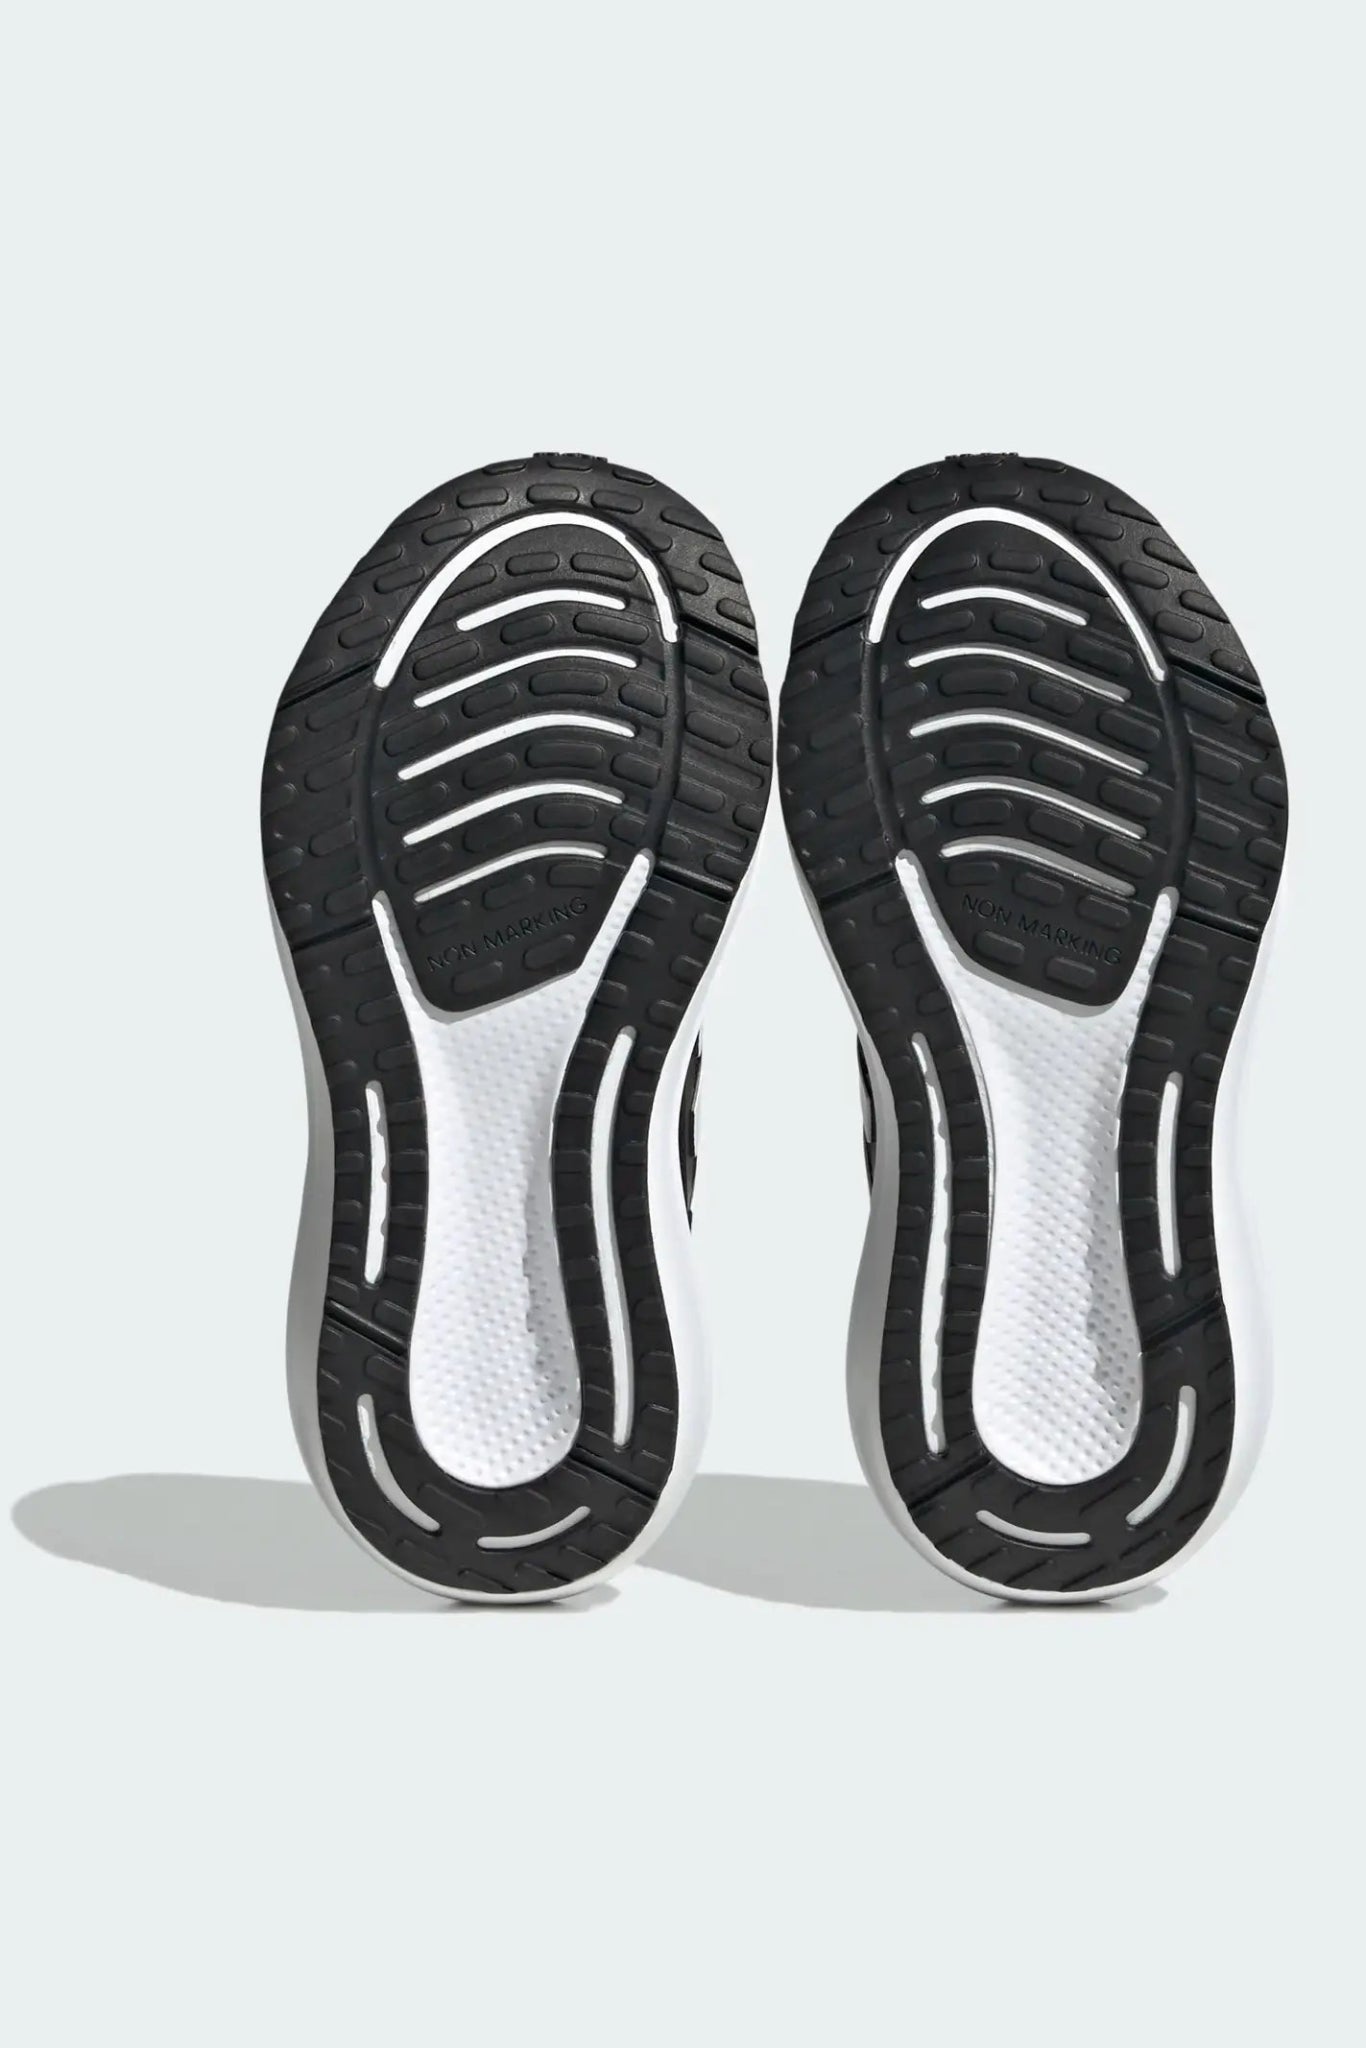 ADIDAS - נעלי ספורט ULTRABOUNCE לילדים בצבע שחור - MASHBIR//365